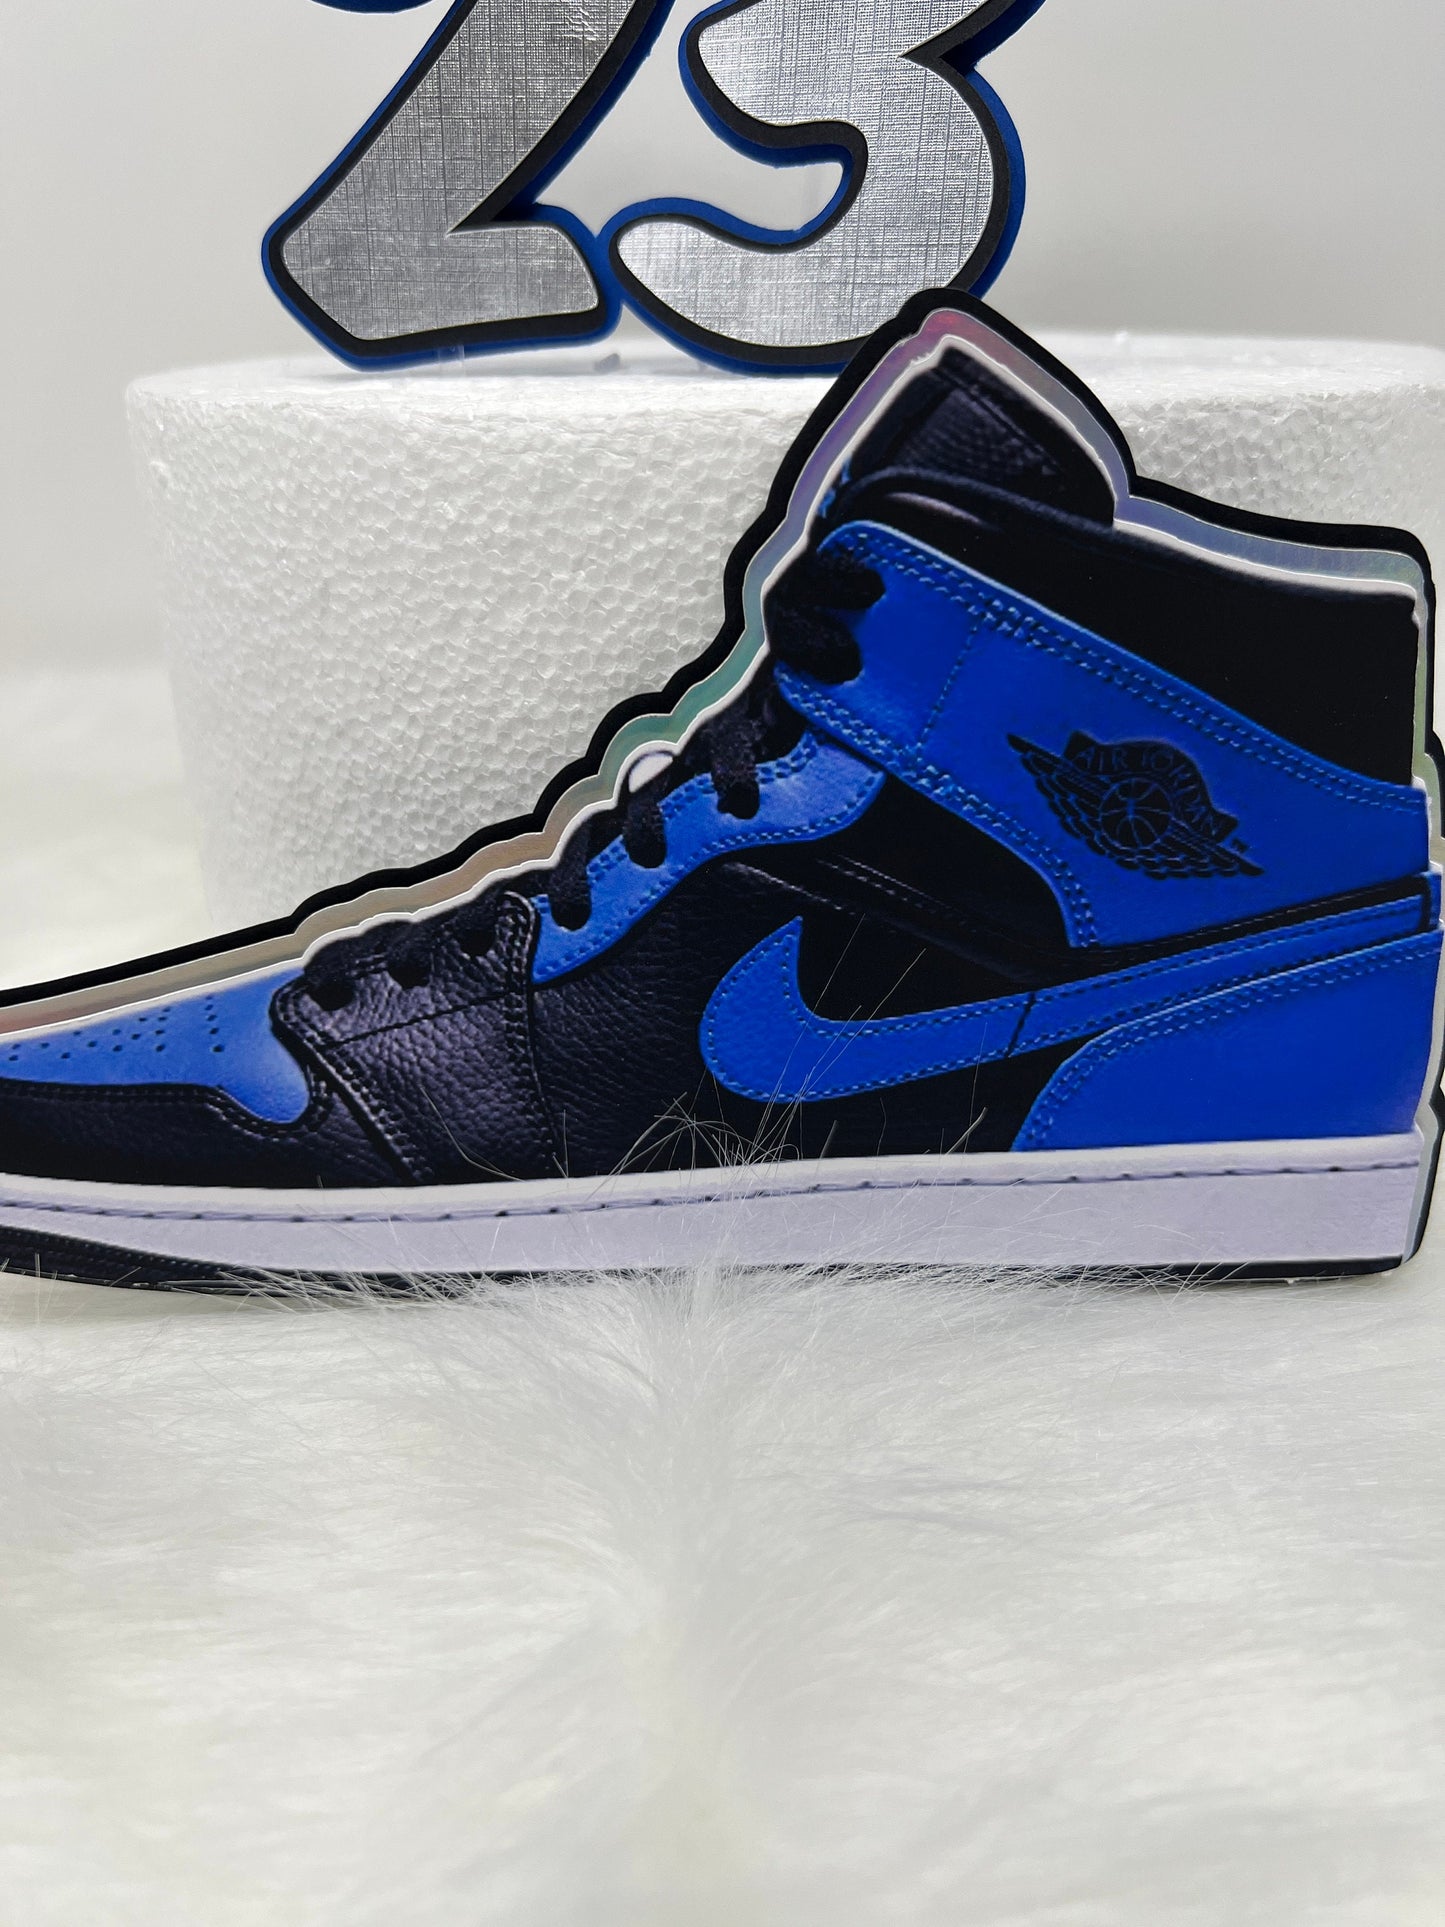 Jordan Sneaker Personalized Cake Topper 👟